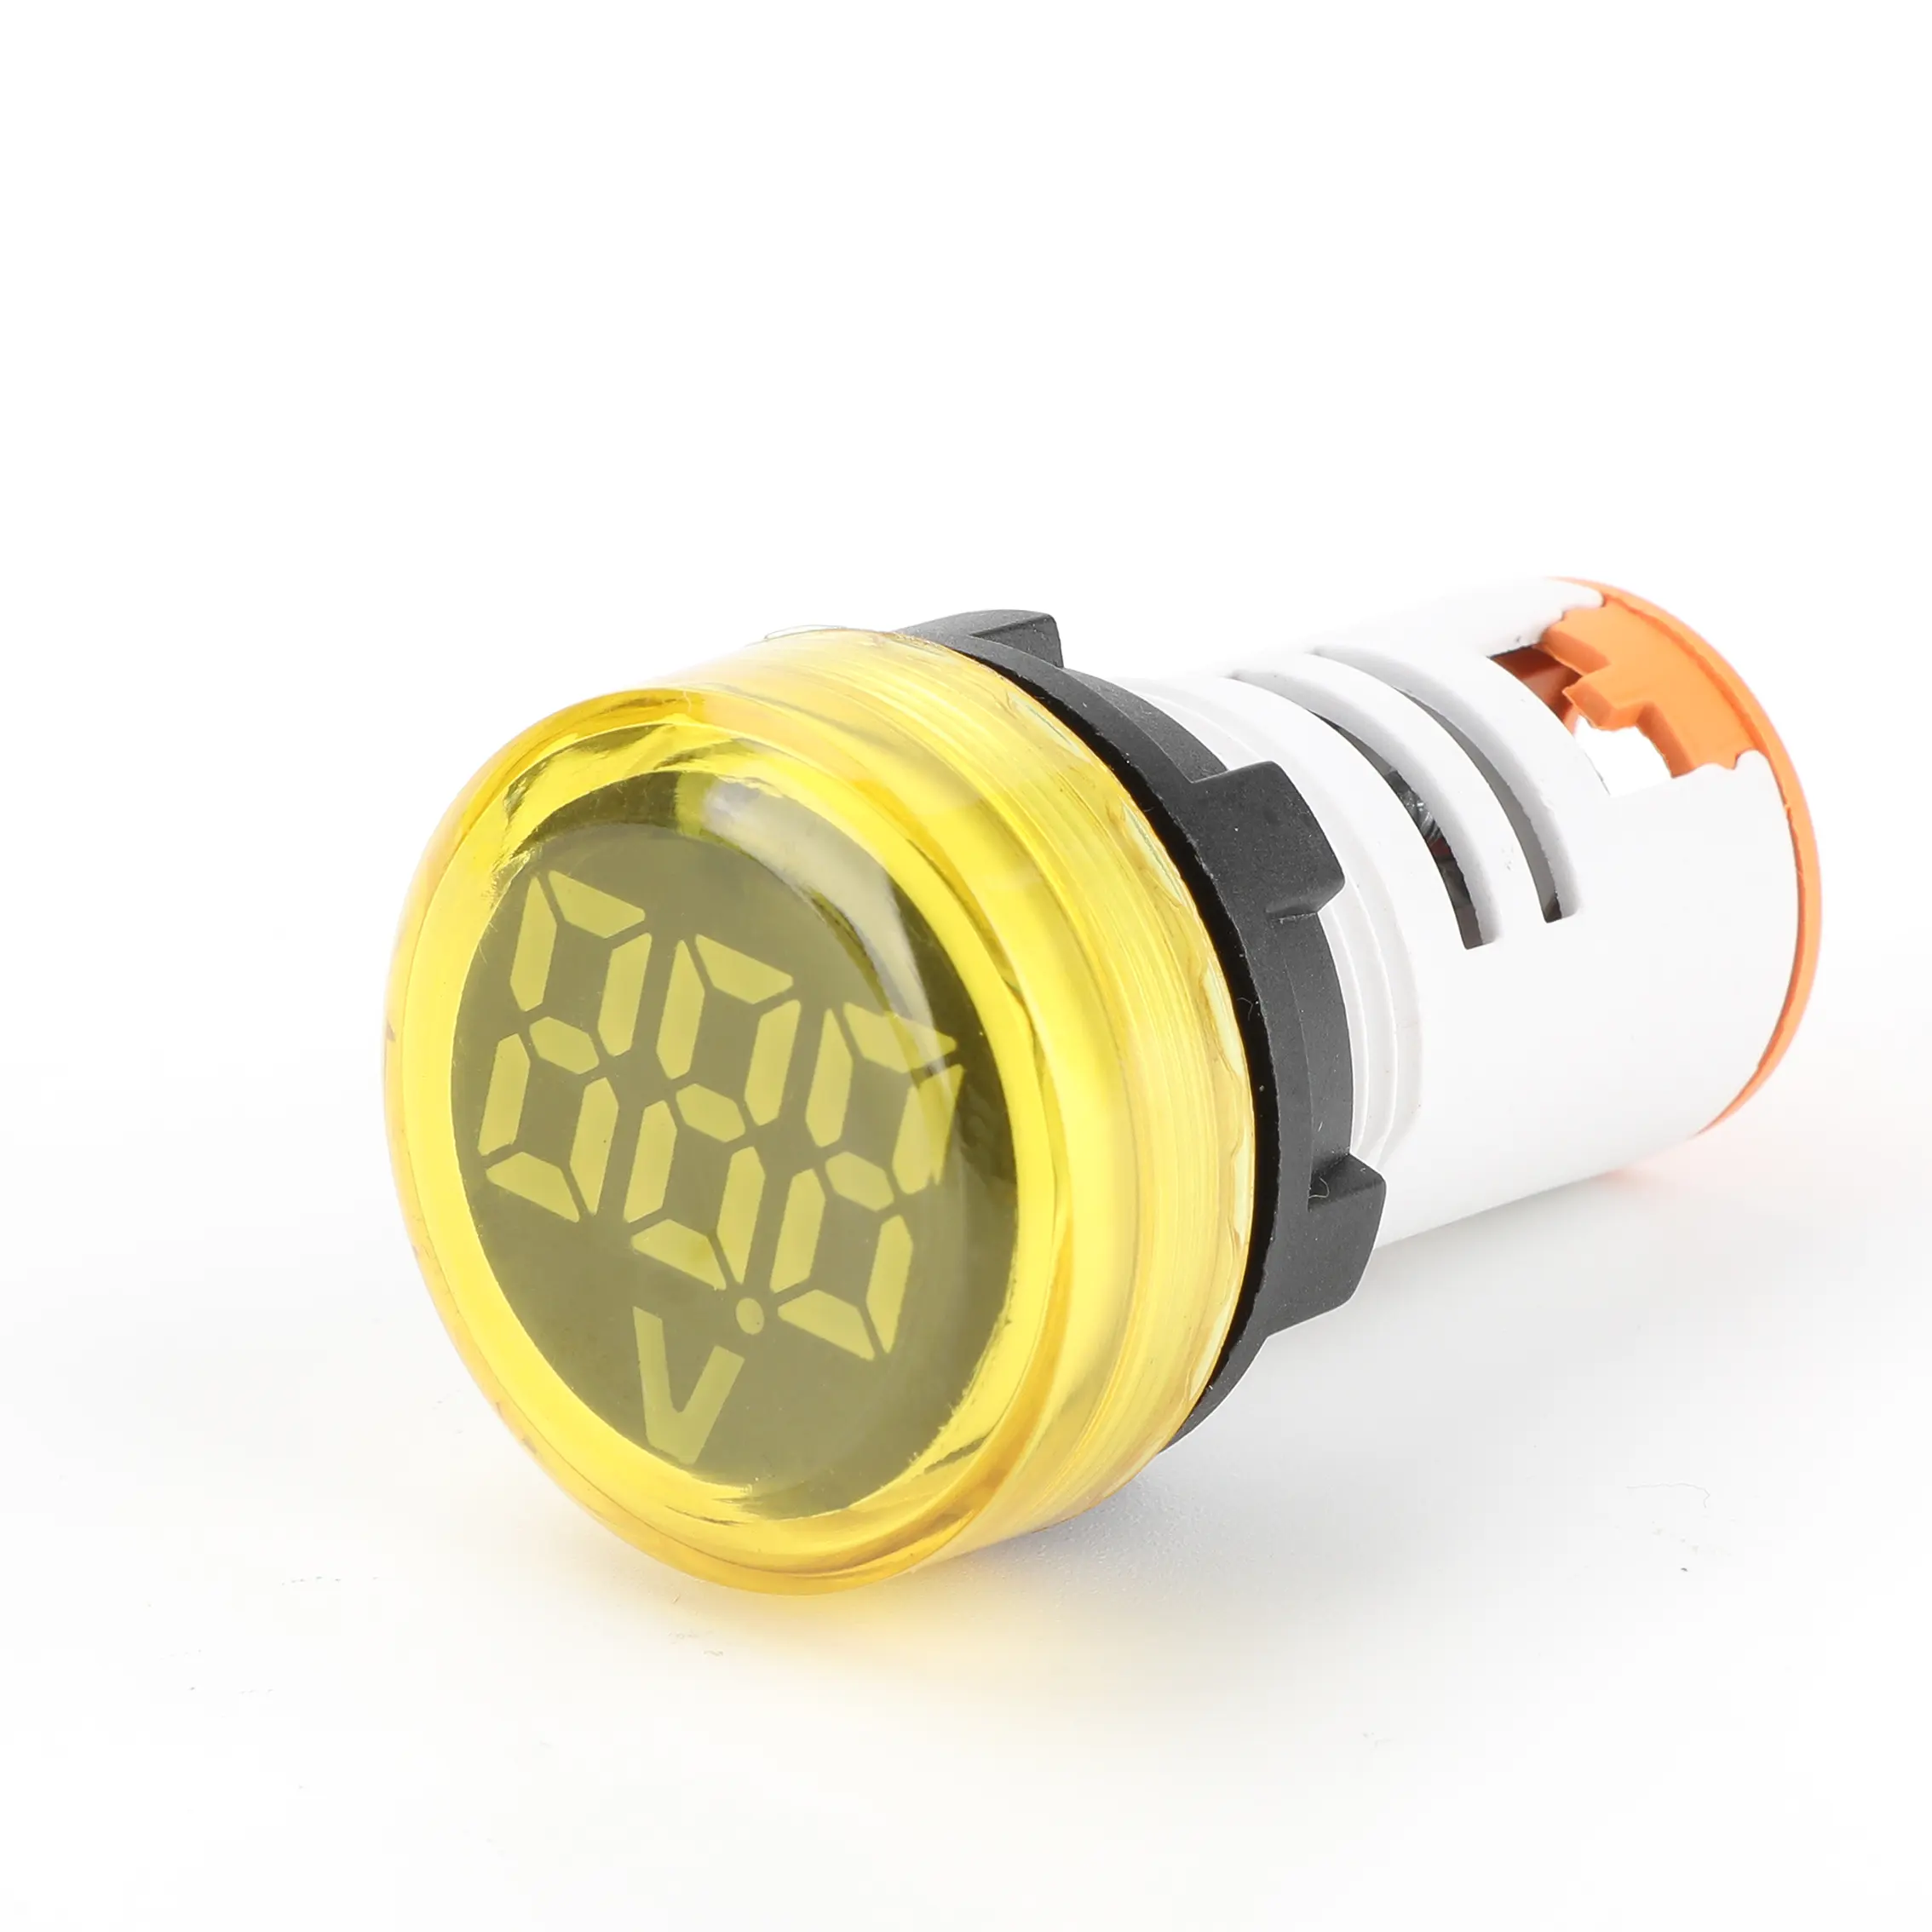 Dia 22Mm Mini Digitale Voltmeter Met Indicator Lamp Spanningsmeter AC60-500V Blauwe Led Voltmeter Indicator Lampjes